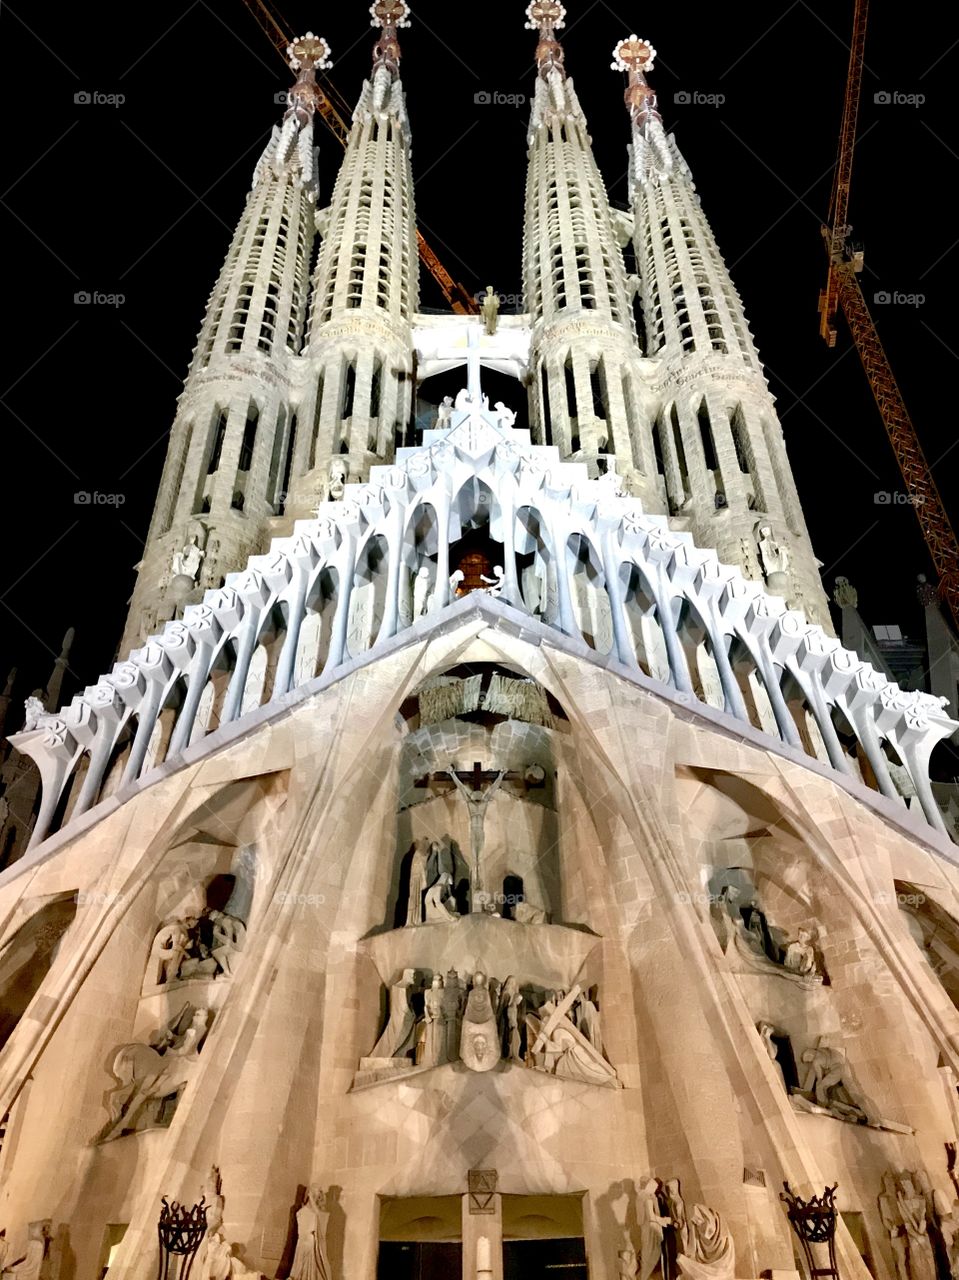 Sagrada Familia Passion Façade at night